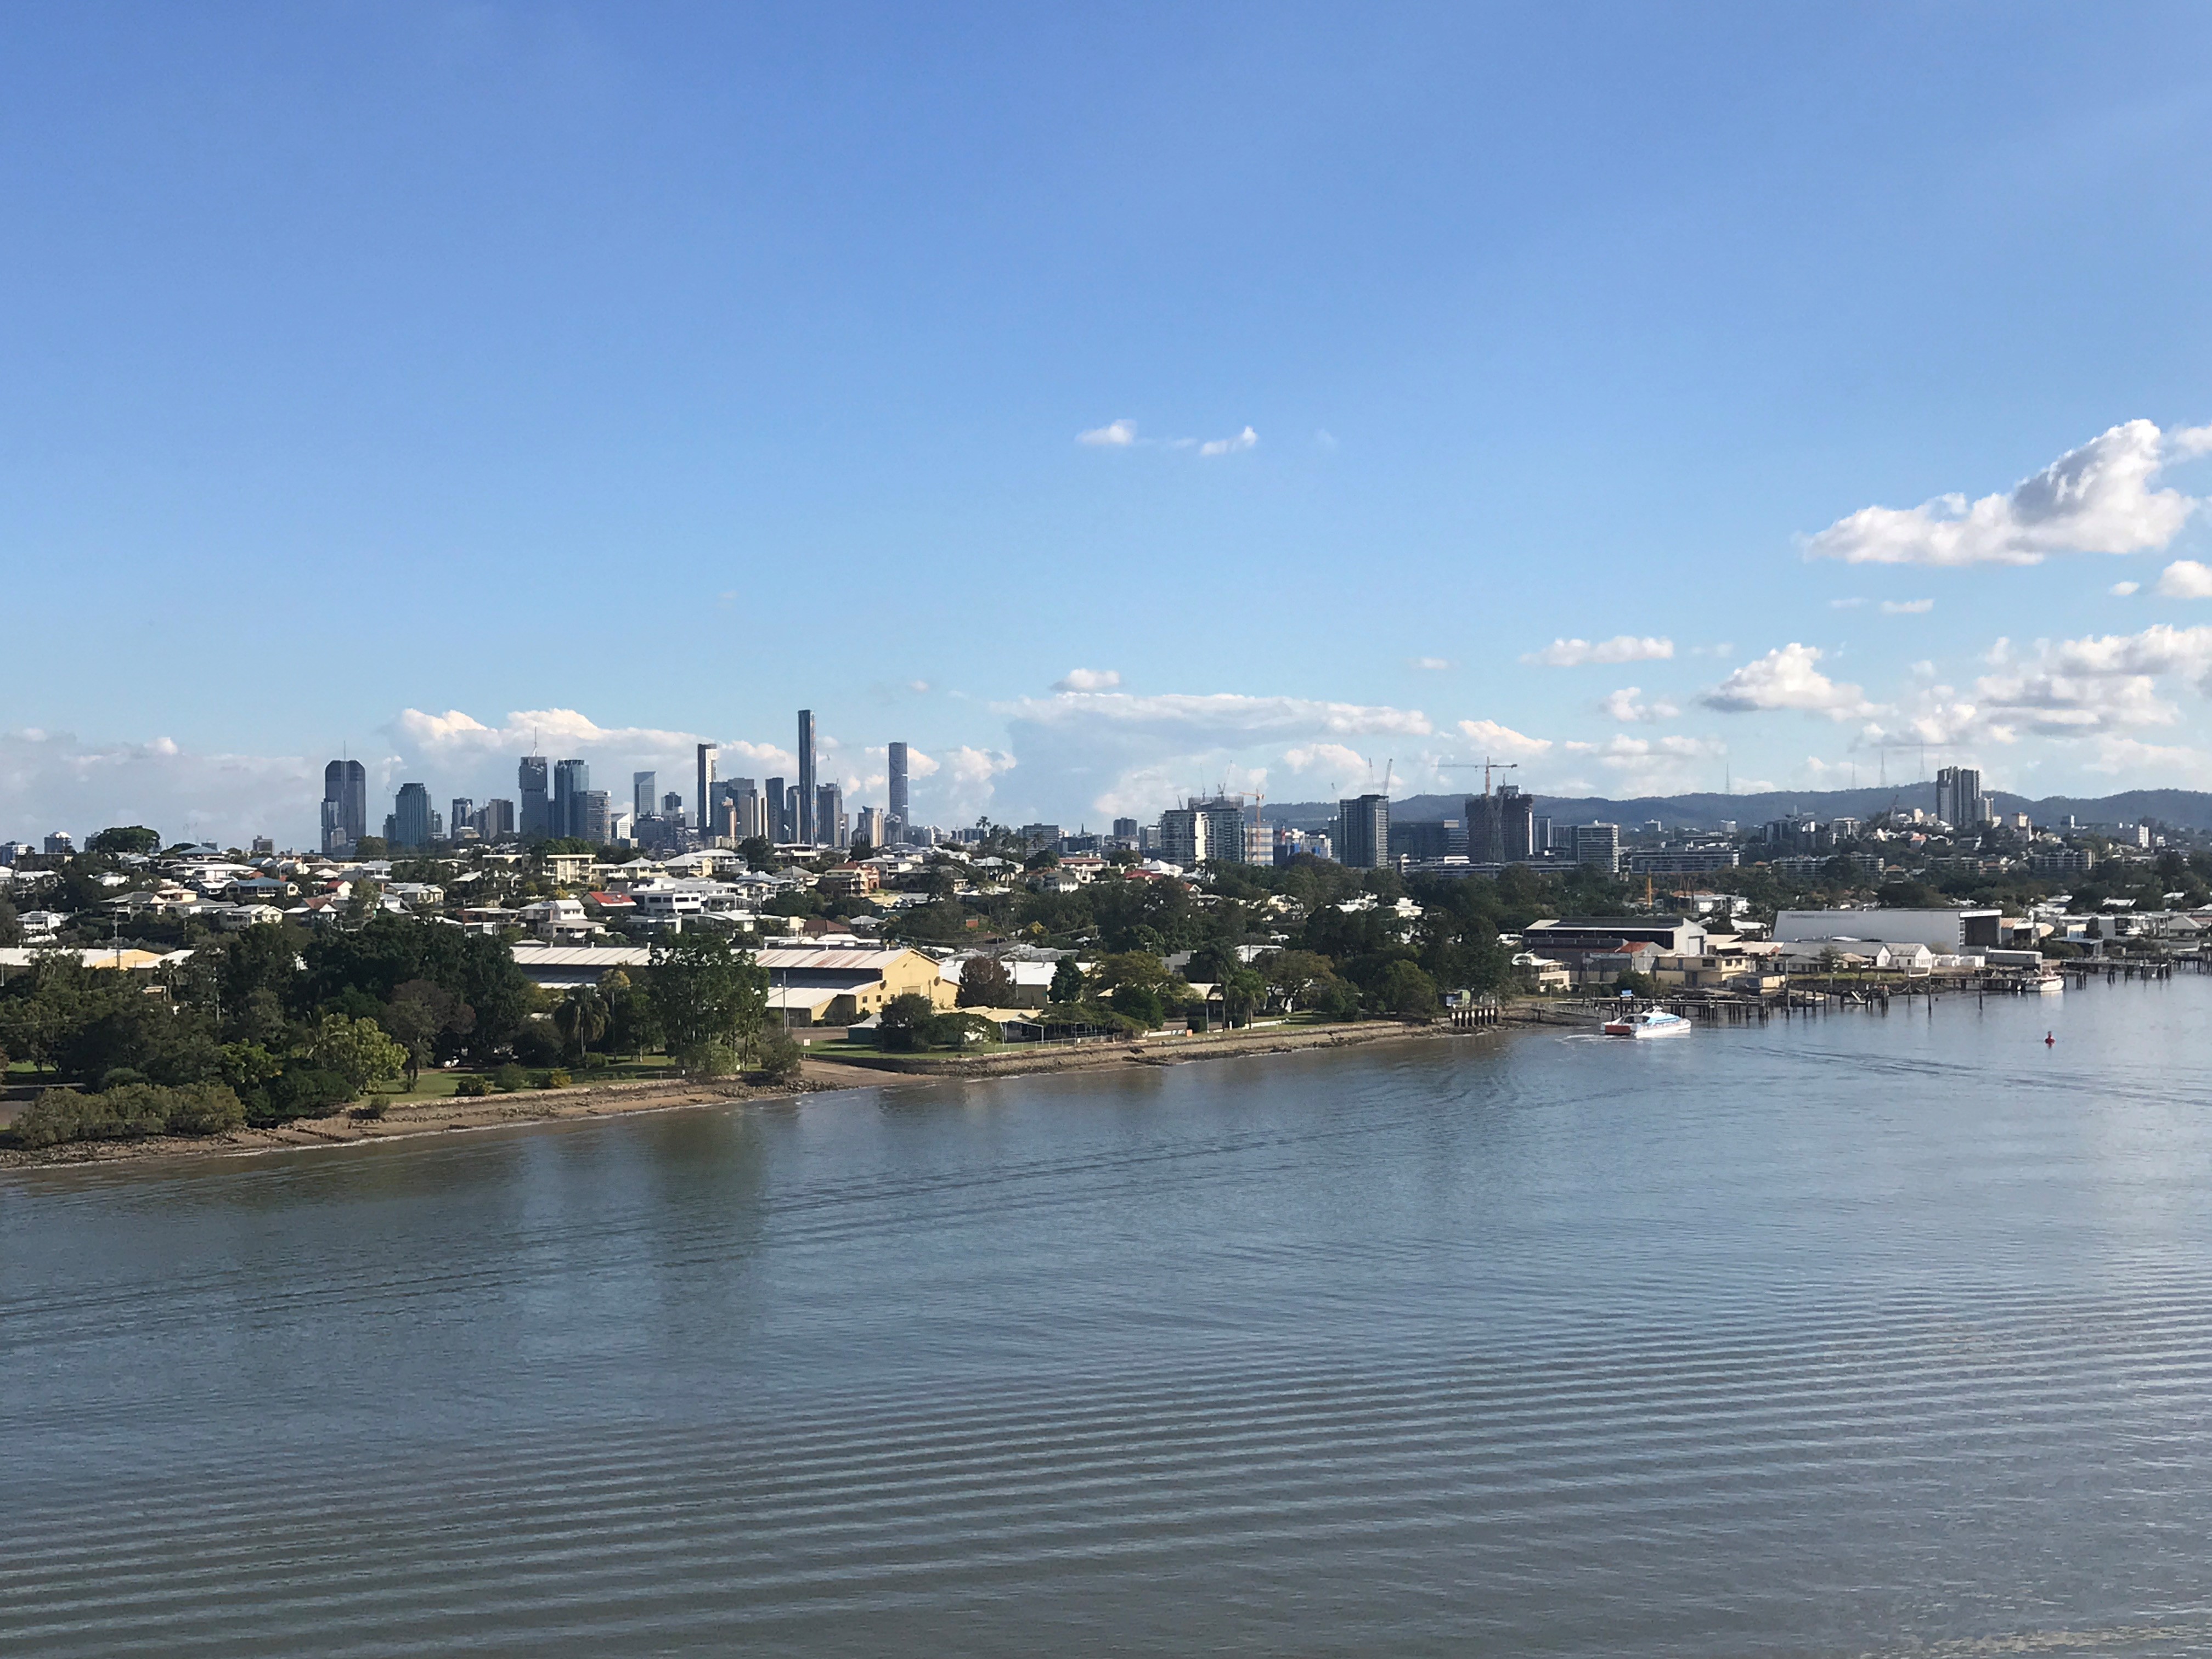 Brisbane median house price jumps as 15 suburbs hit million-dollar mark